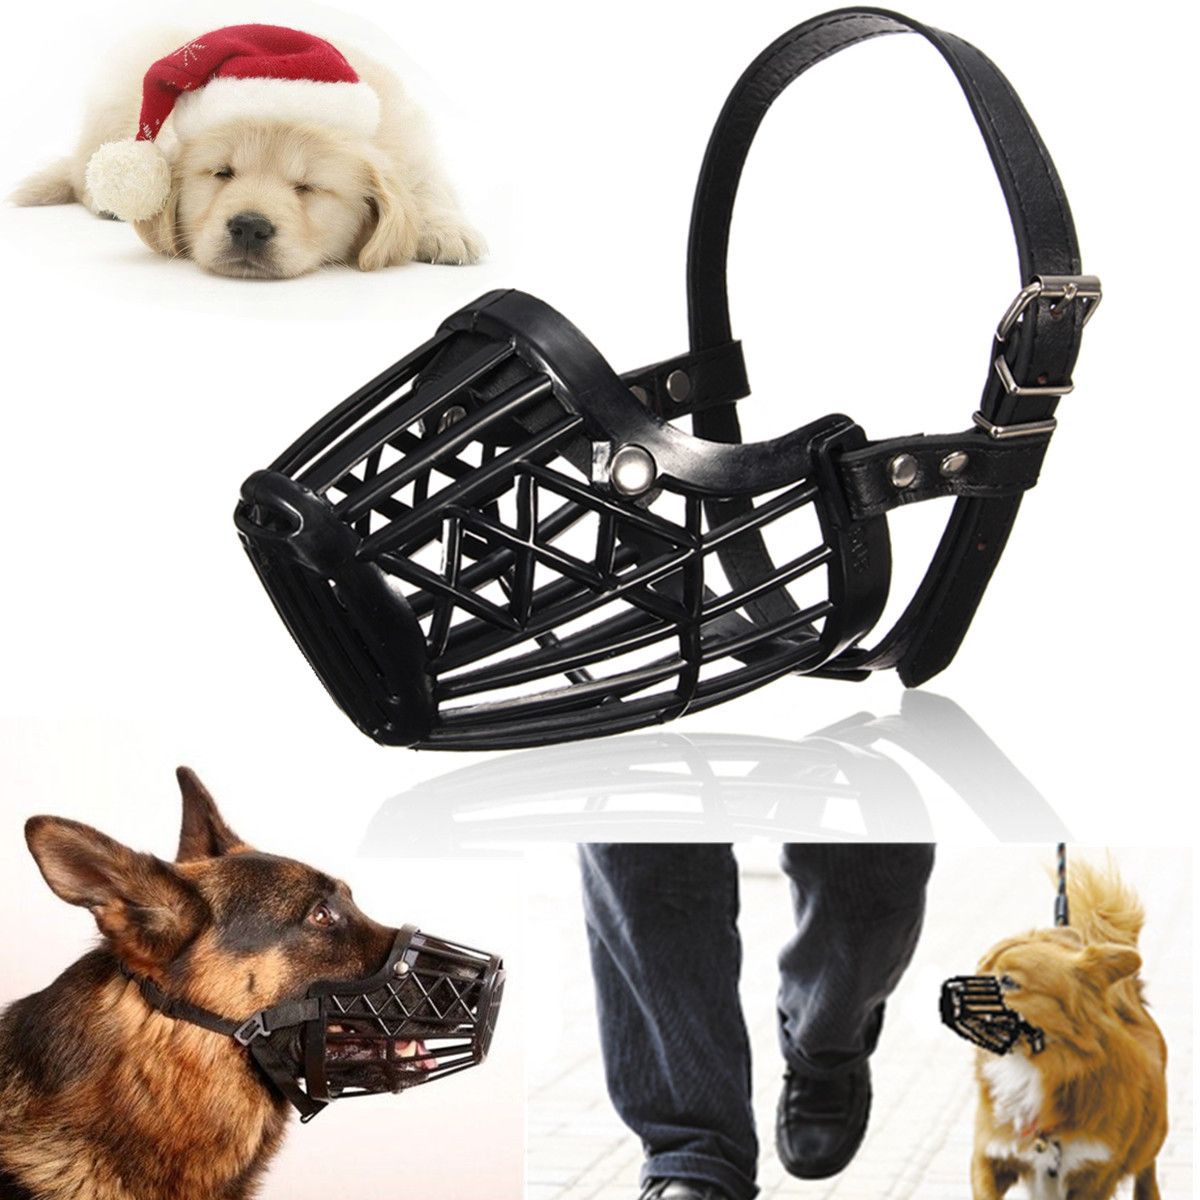 Adjustable-Pet-Dog-No-Bite-Plastic-Basket-Muzzle-Cage-Mouth-Mesh-Cover-7-Sizes-1277368